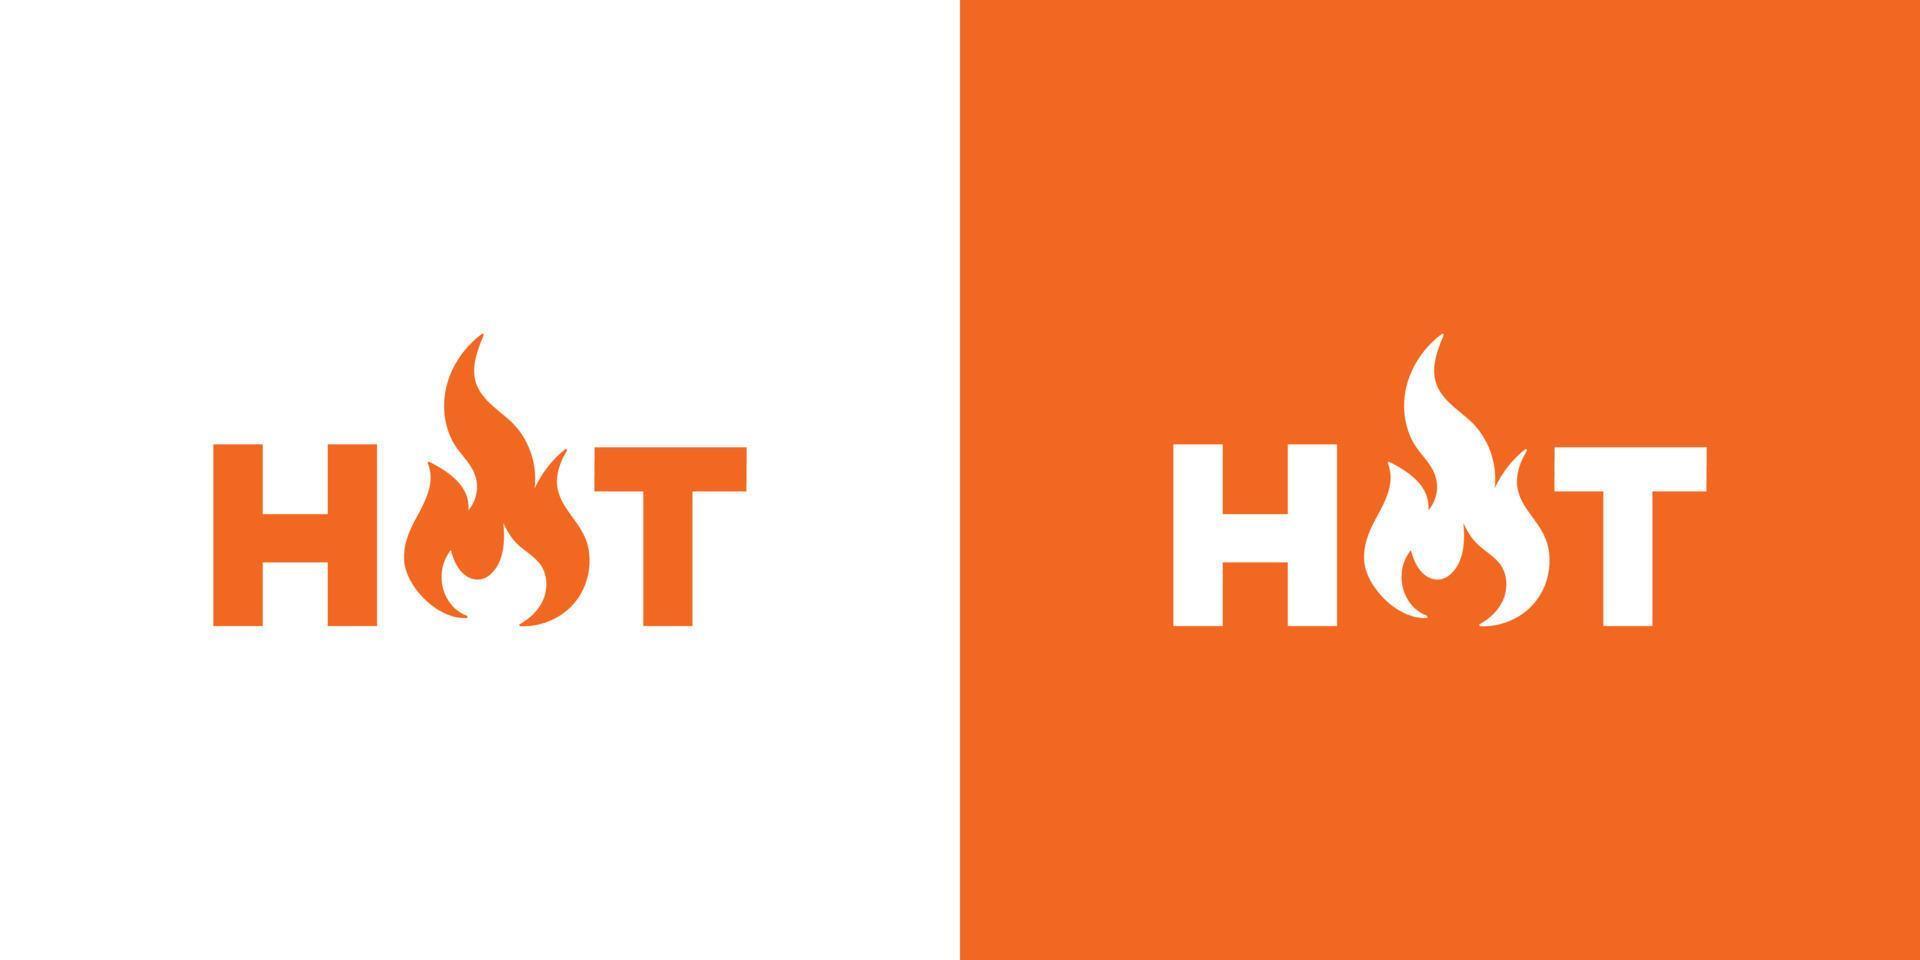 moderno y profesional caliente fuego logo texto diseño vector